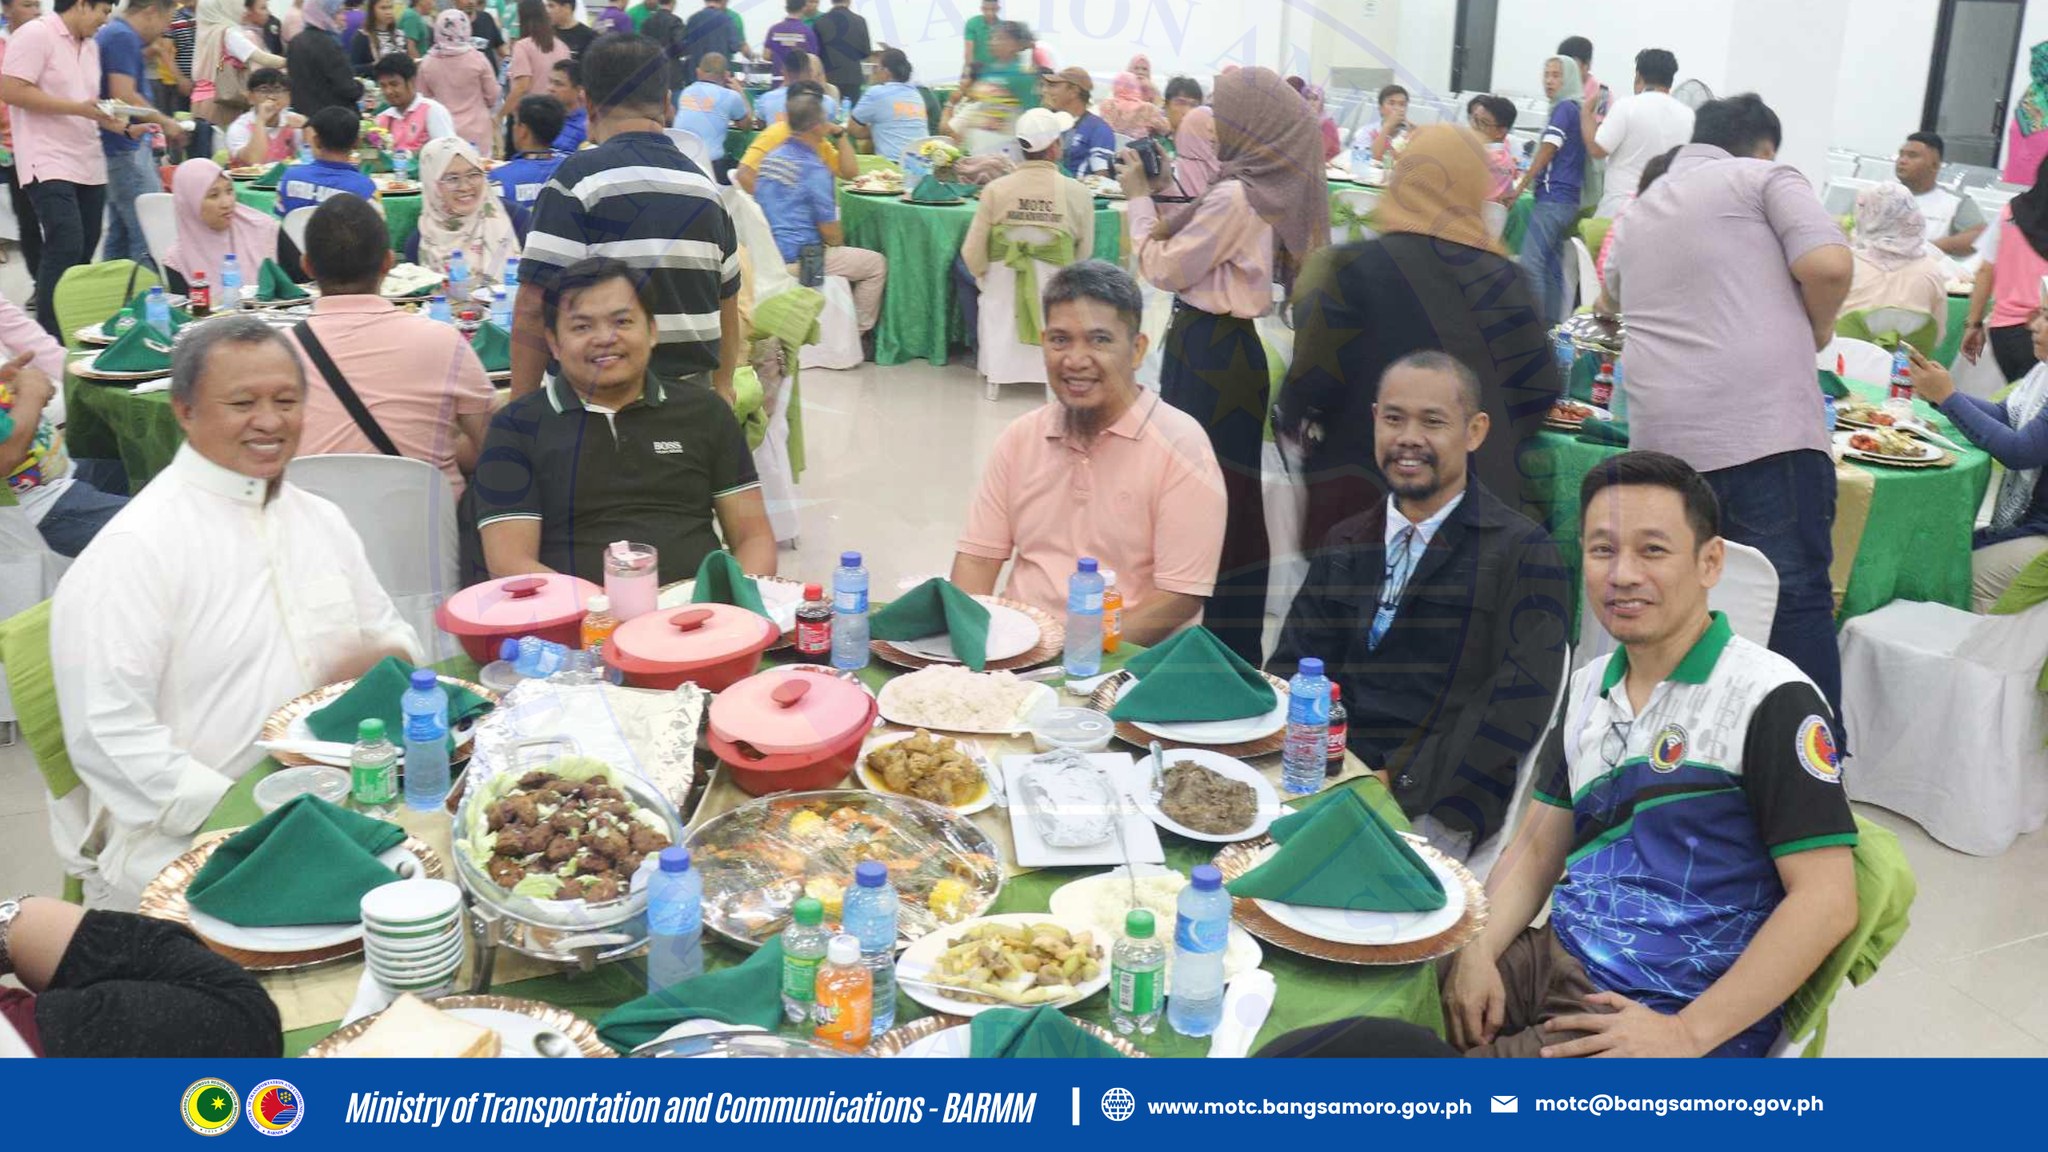 MOTC’s Air Transportation Services host free iftar